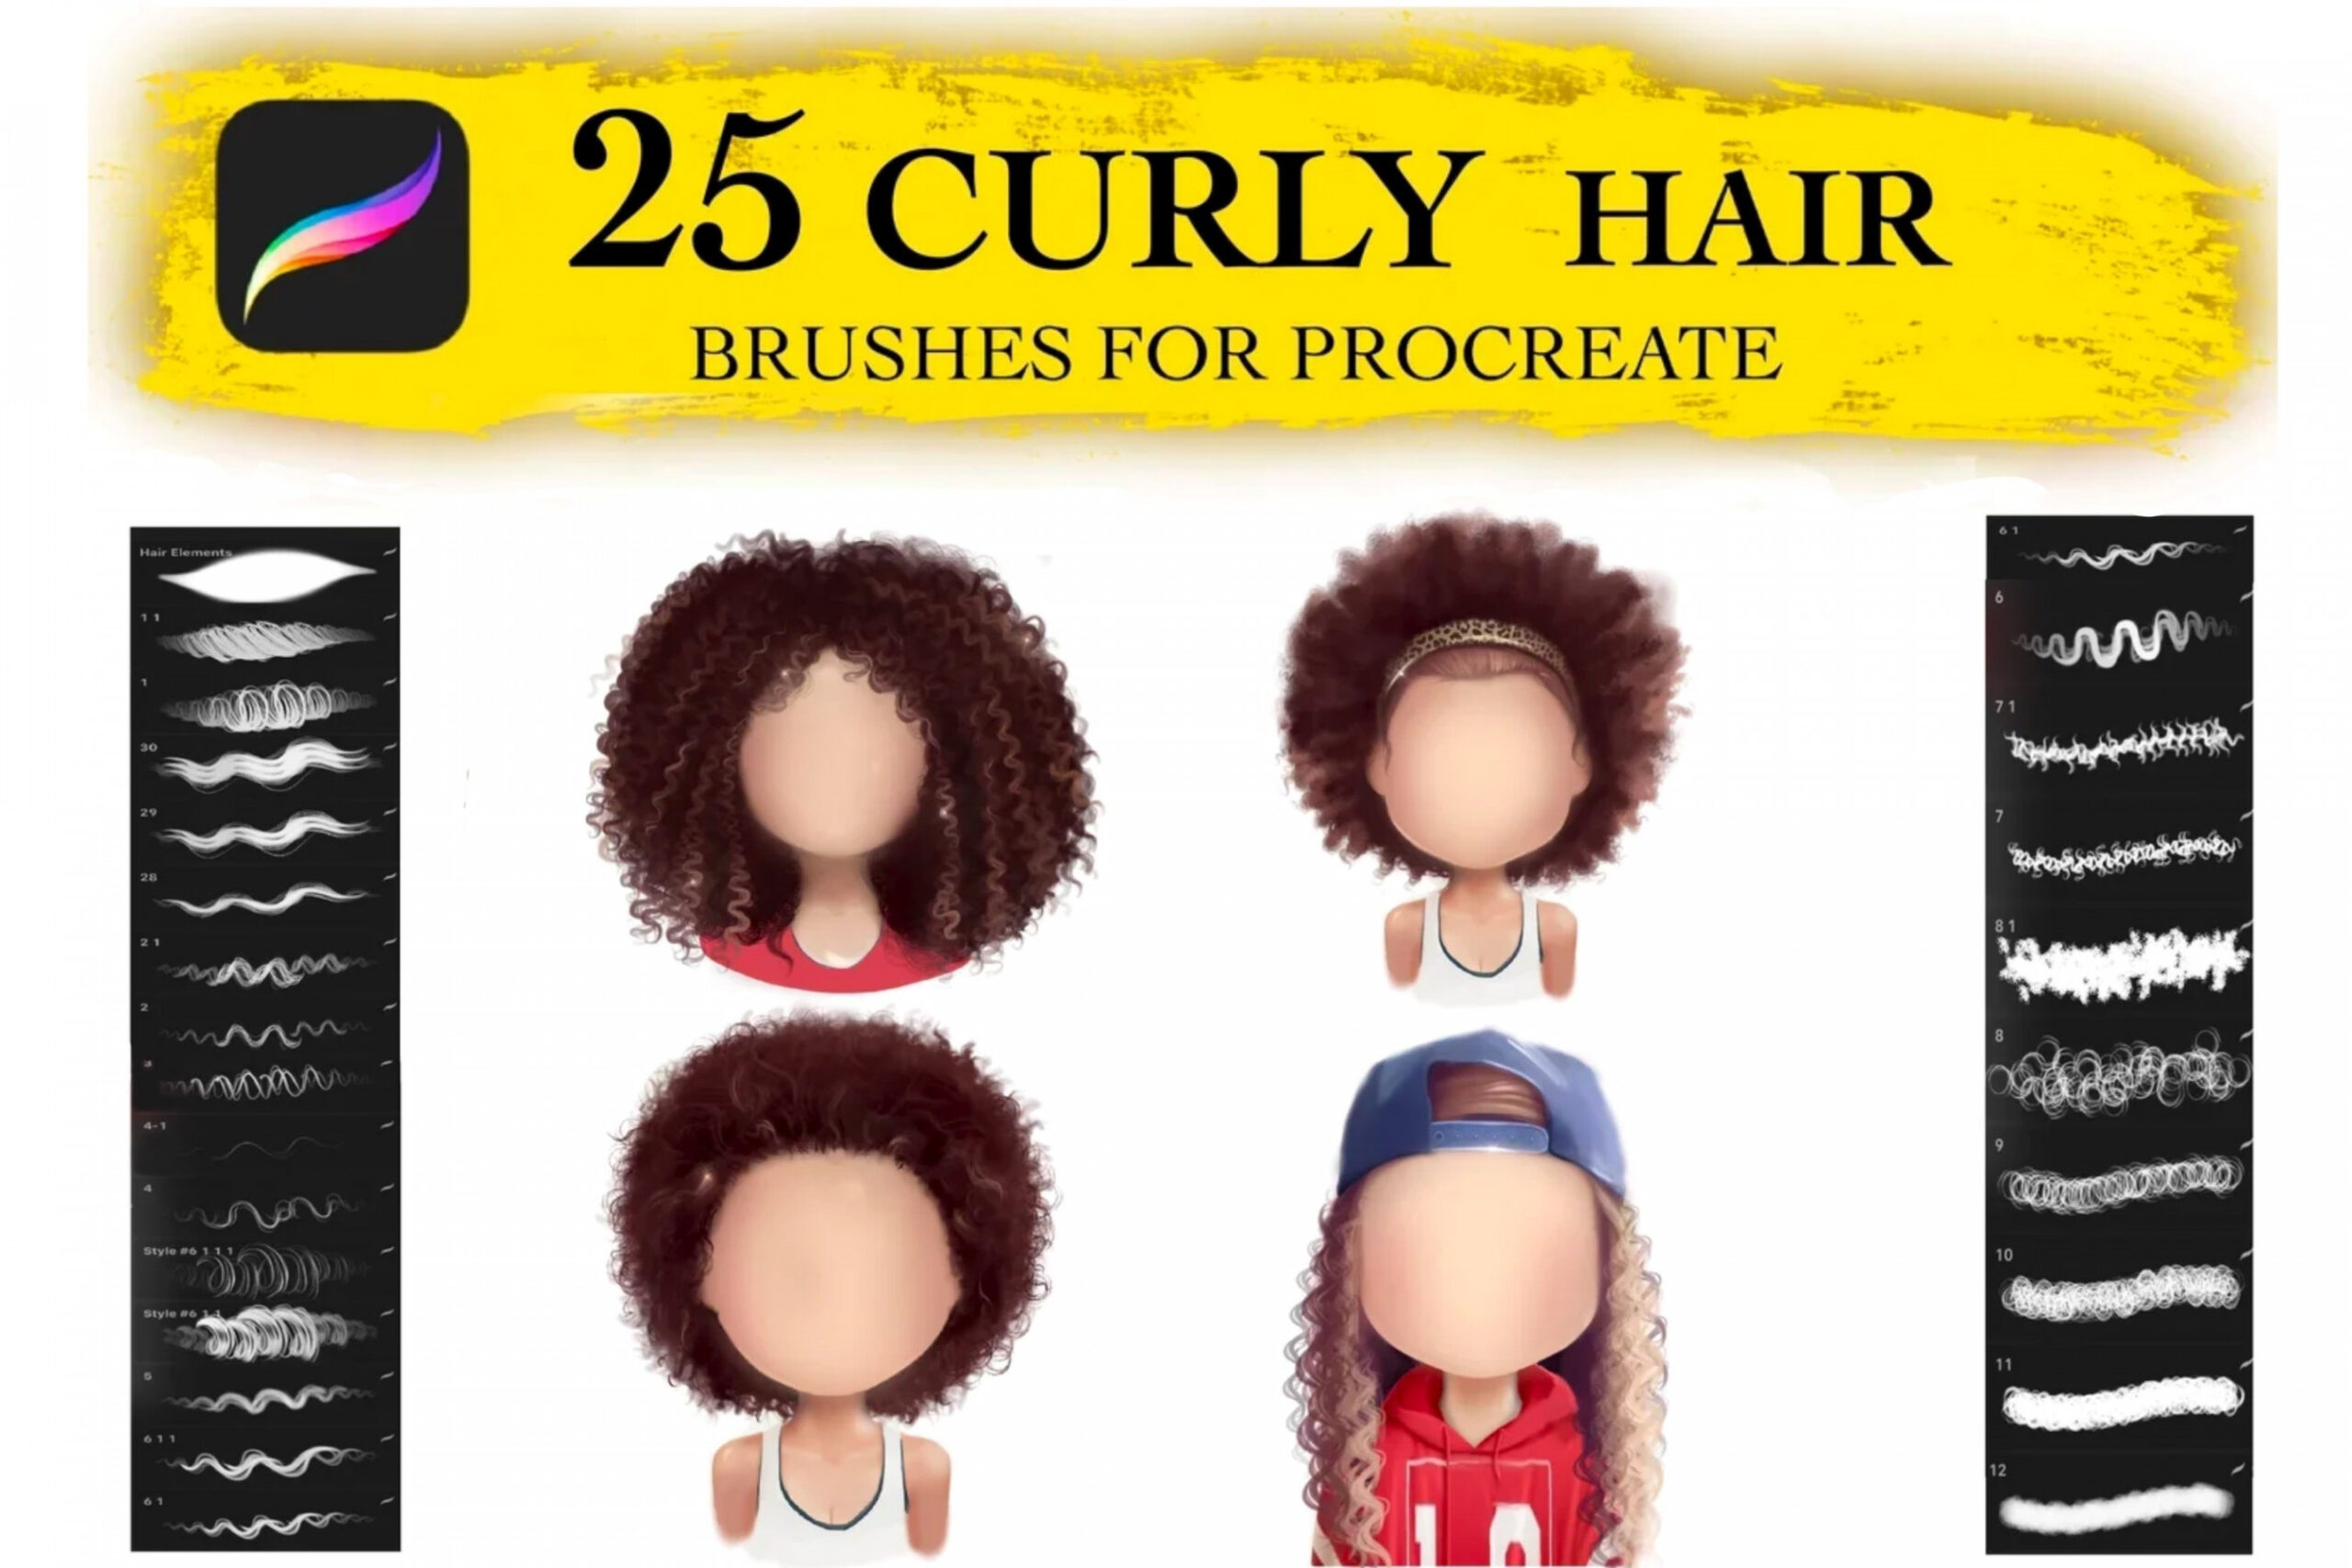 Curly Hair Brushes Procreate, Braids Brushes ()